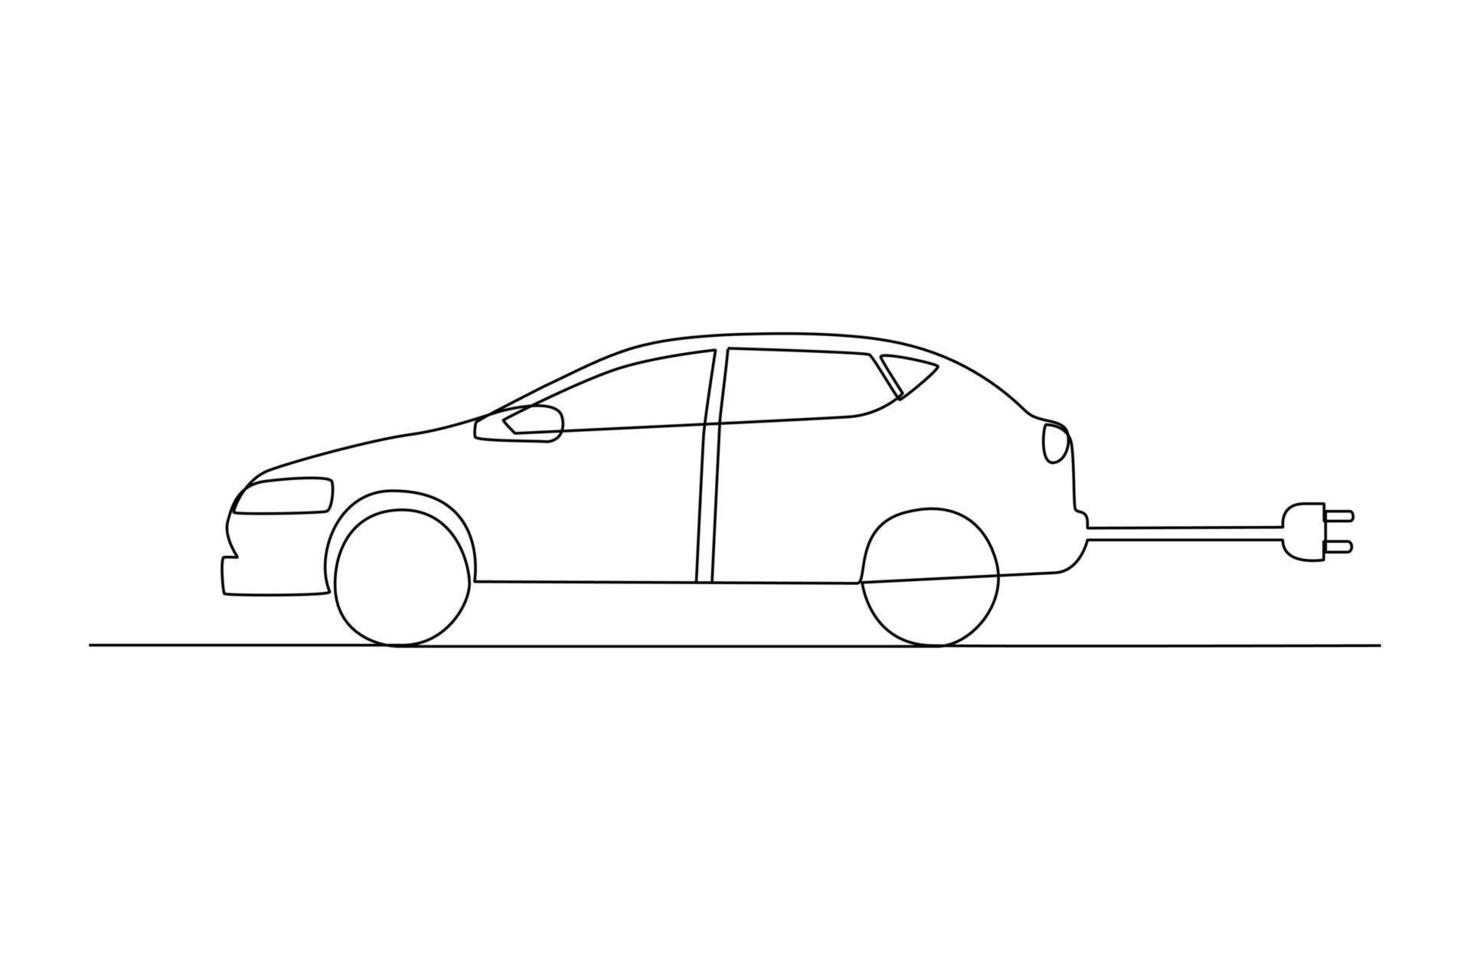 kontinuerlig ett linje teckning elektrisk bil med plugg. elektrisk bil begrepp. enda linje dra design vektor grafisk illustration.